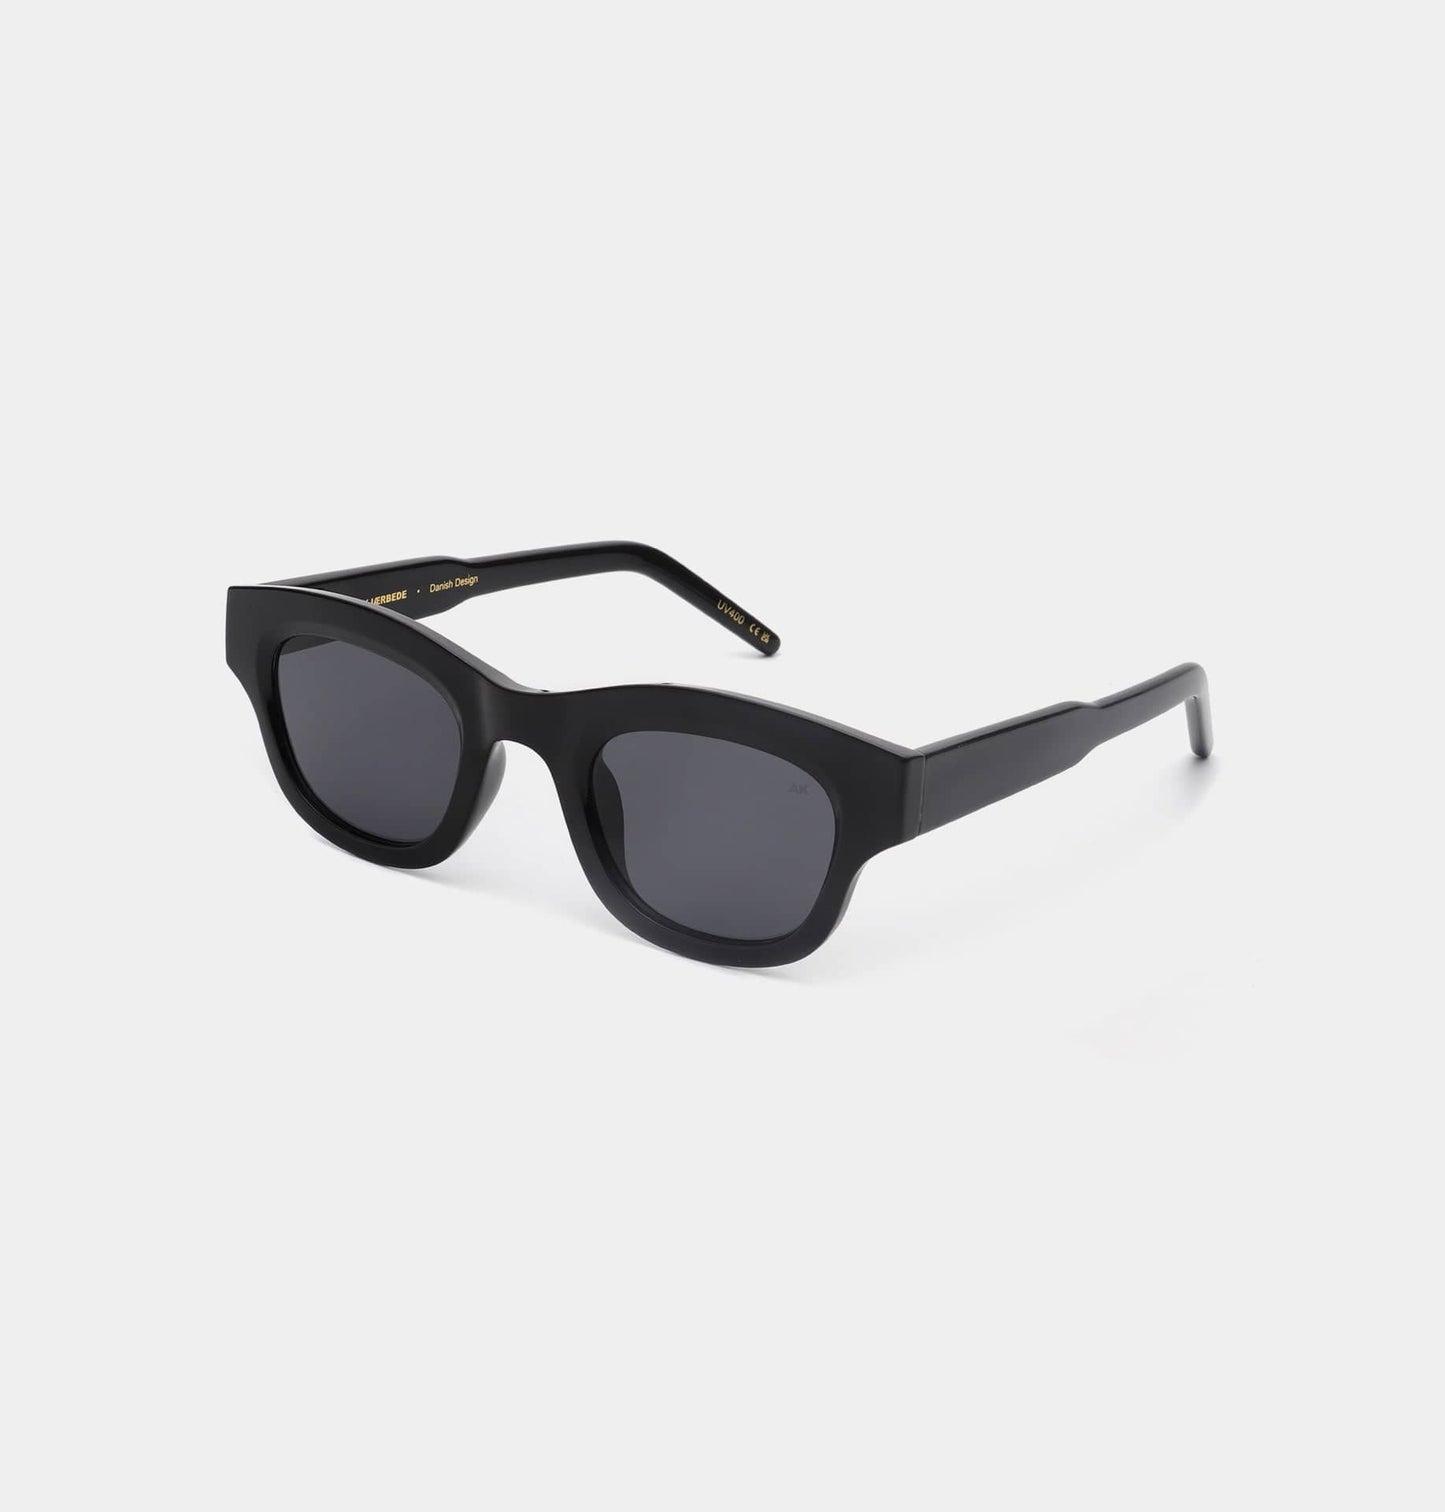 A.Kjaerbede Lane Sunglasses Black